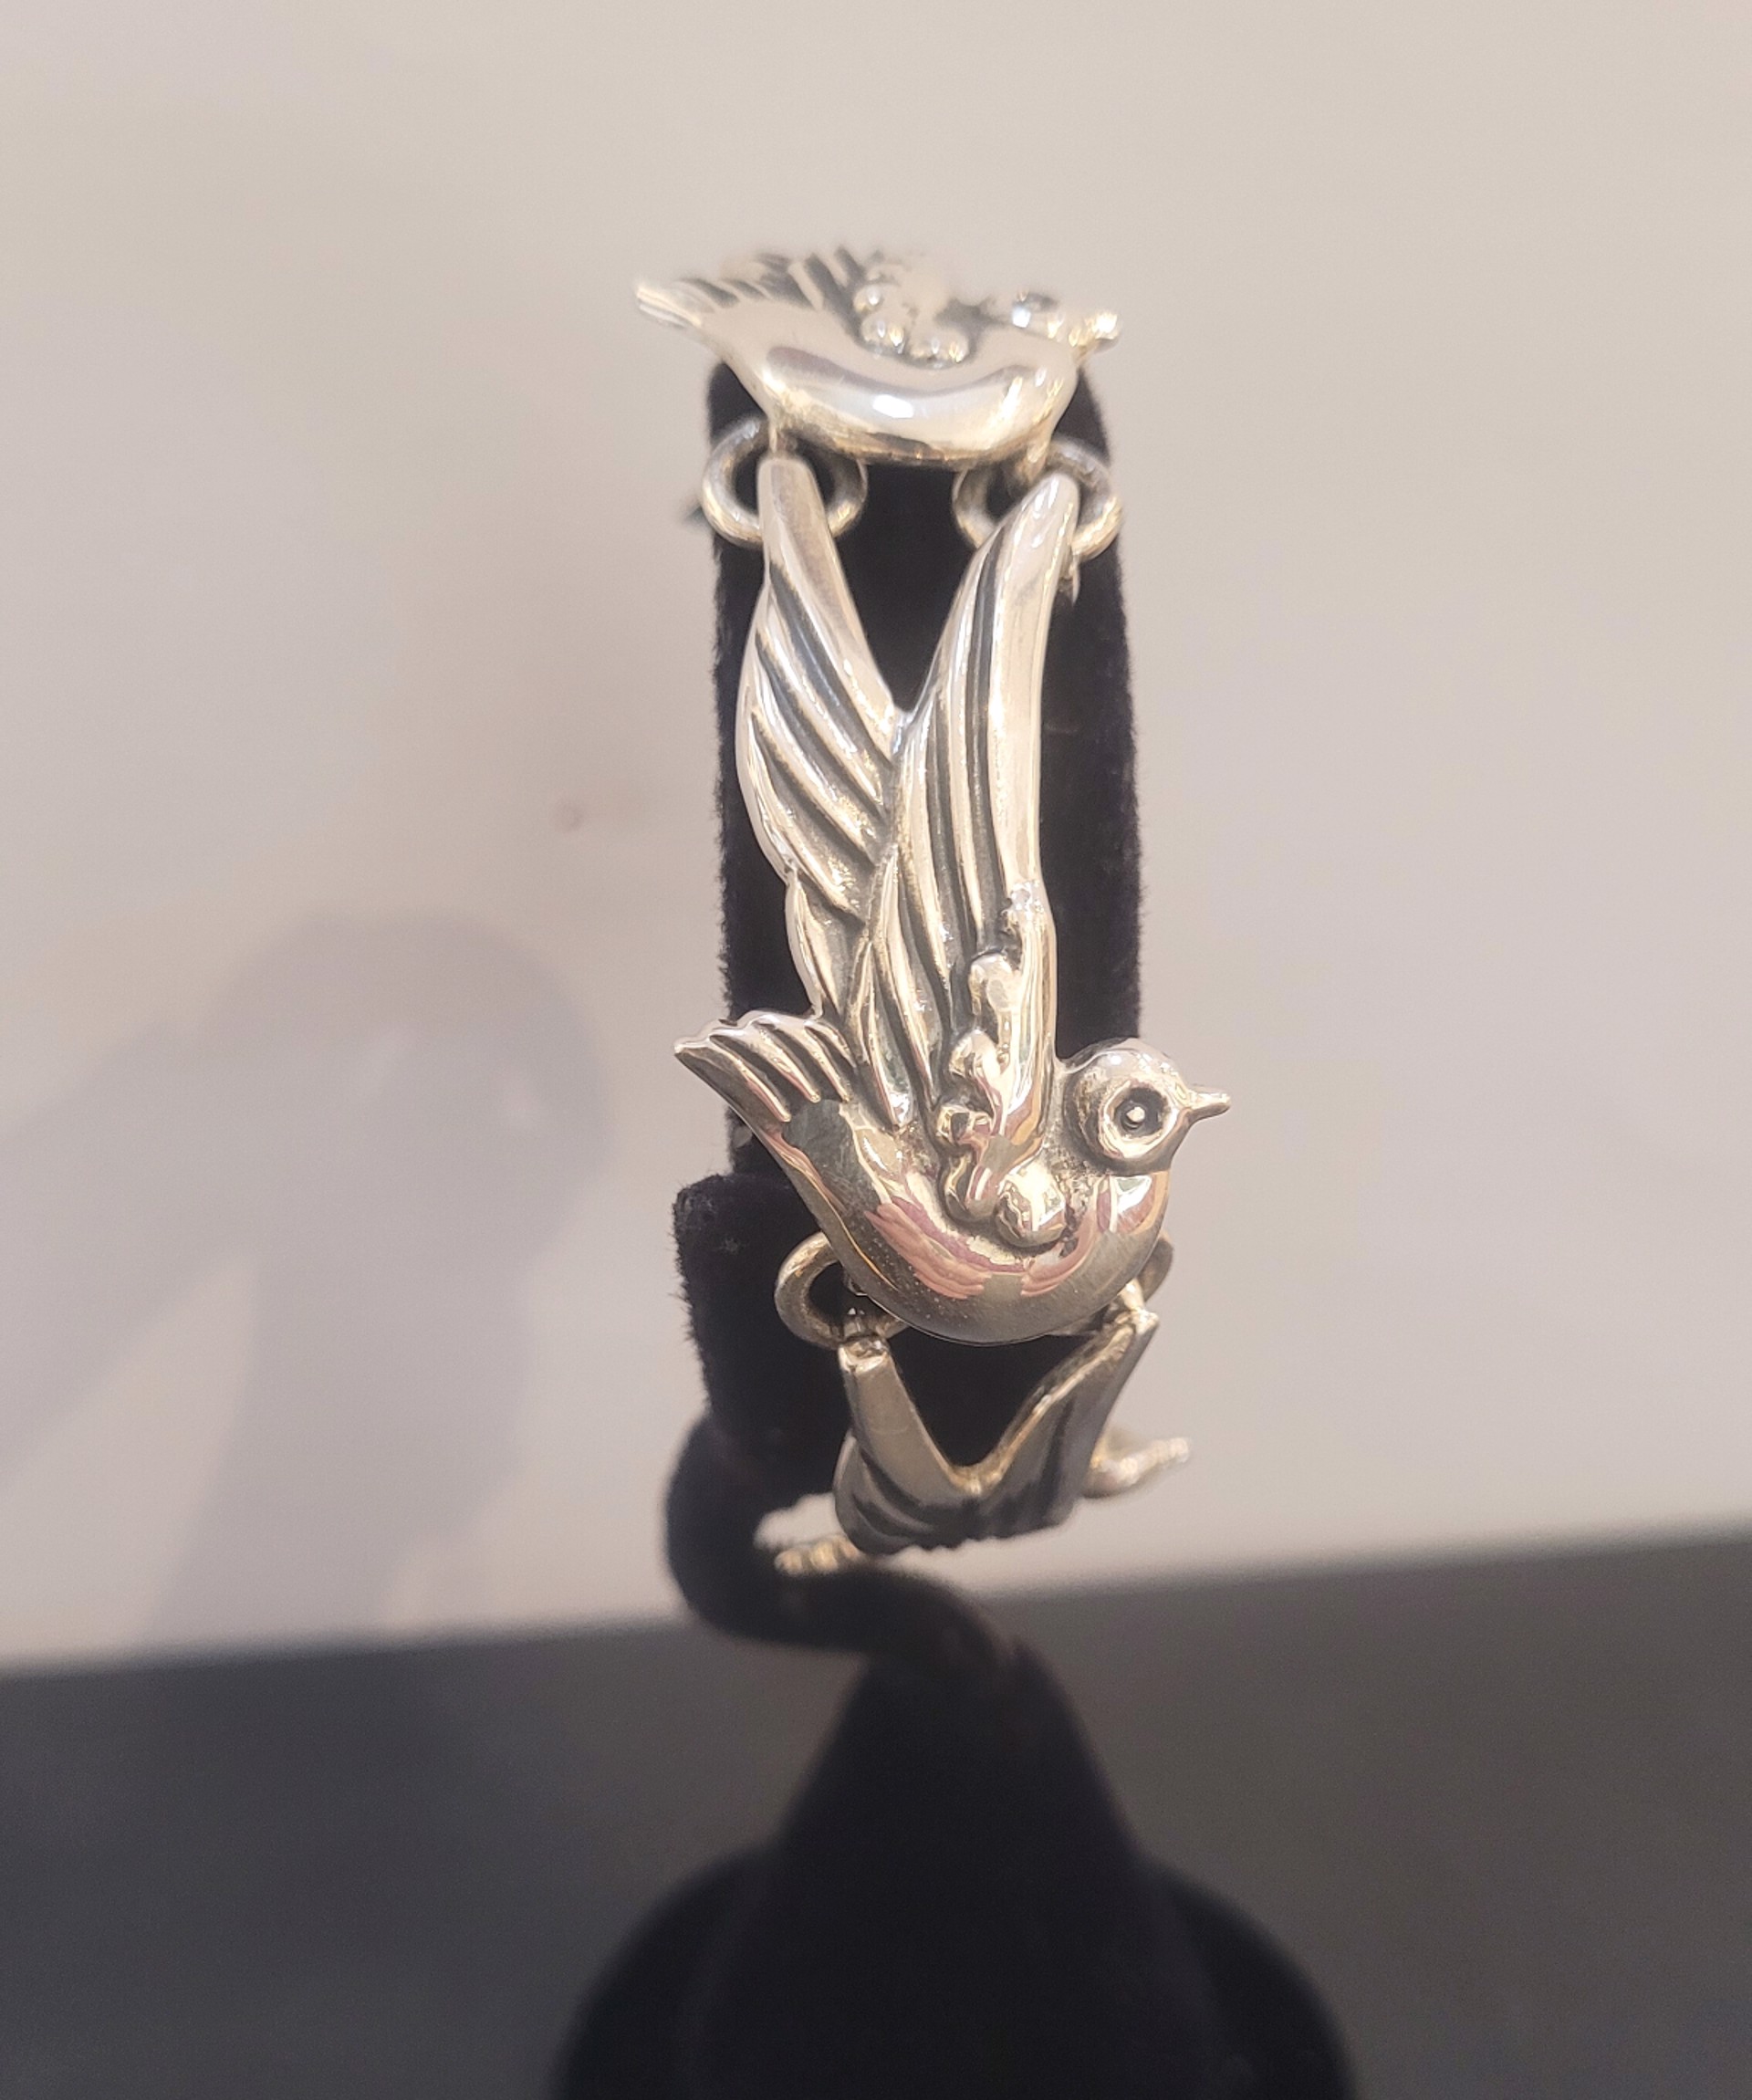 Bracelet - Sterling Silver "Los Alves" Doves, Margot de Taxco Design by Indigo Desert Ranch - Jewelry